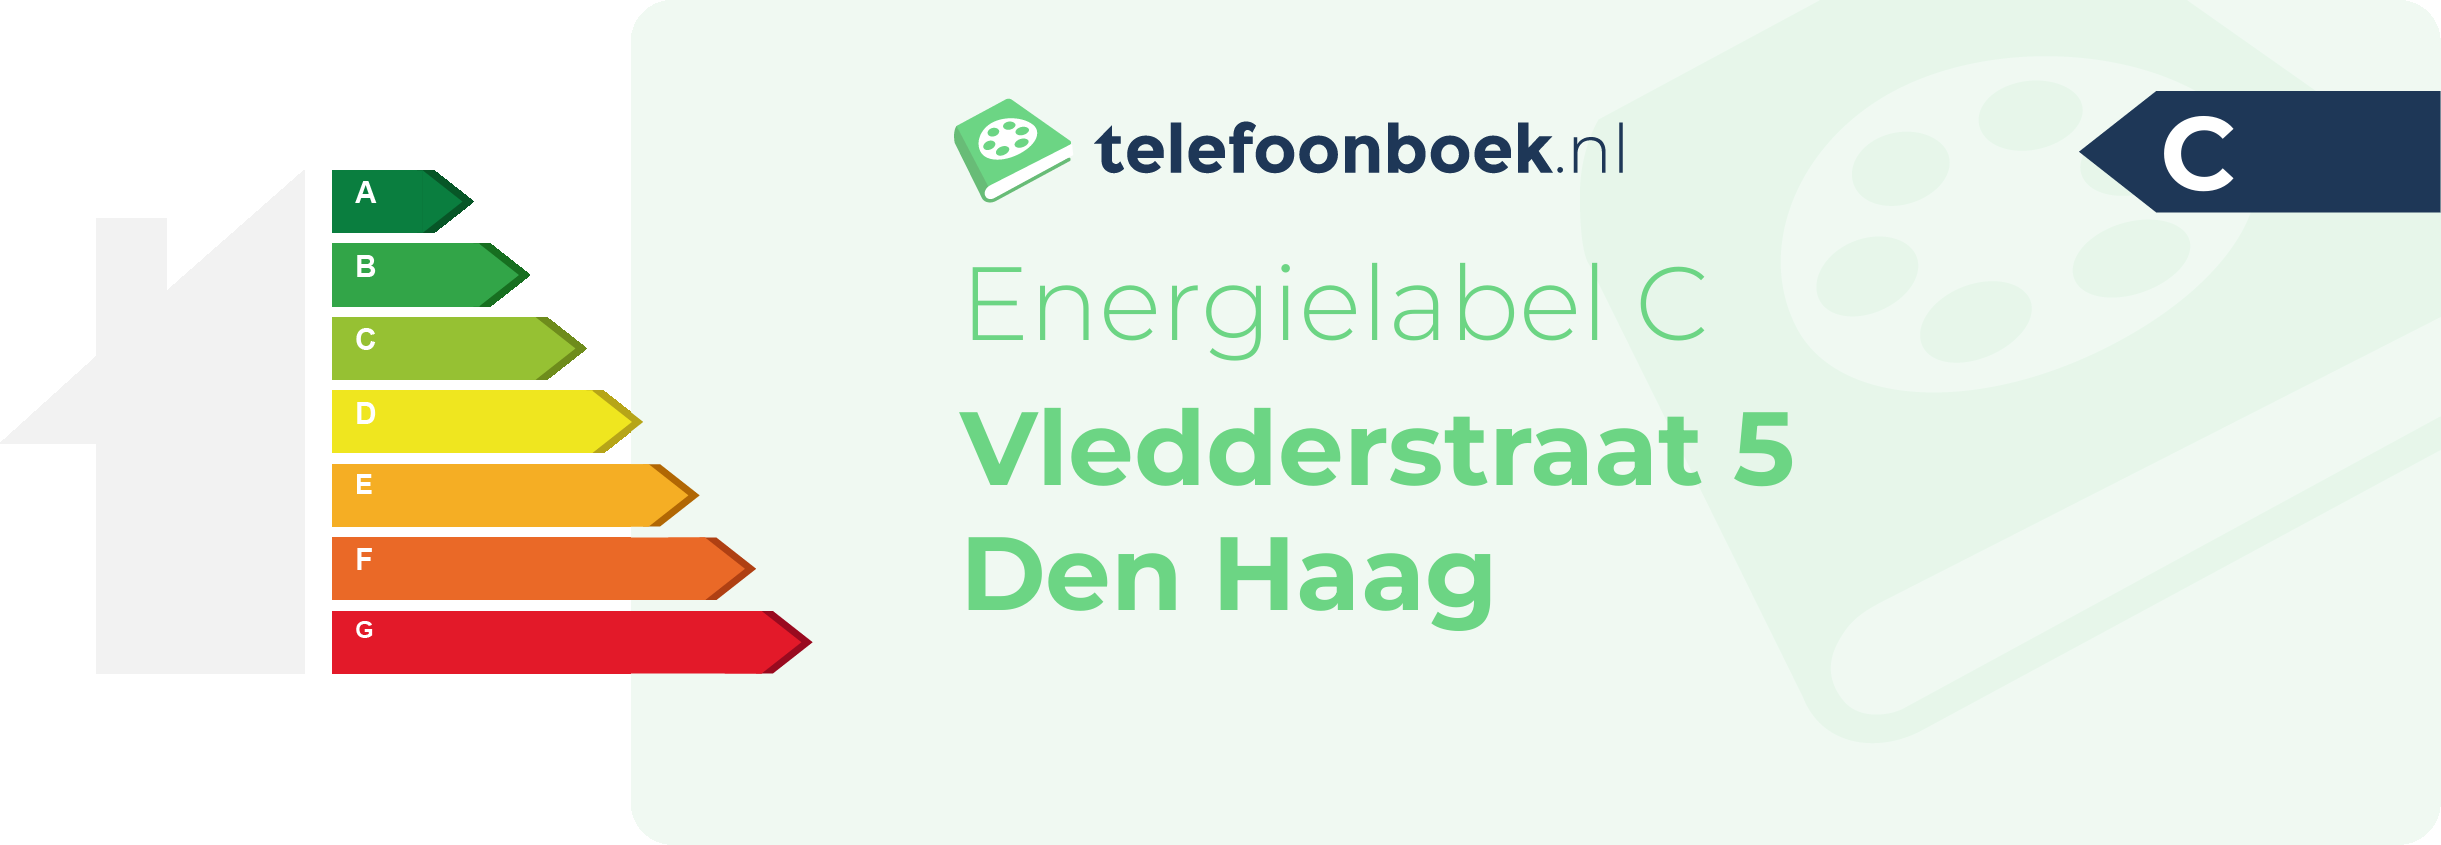 Energielabel Vledderstraat 5 Den Haag